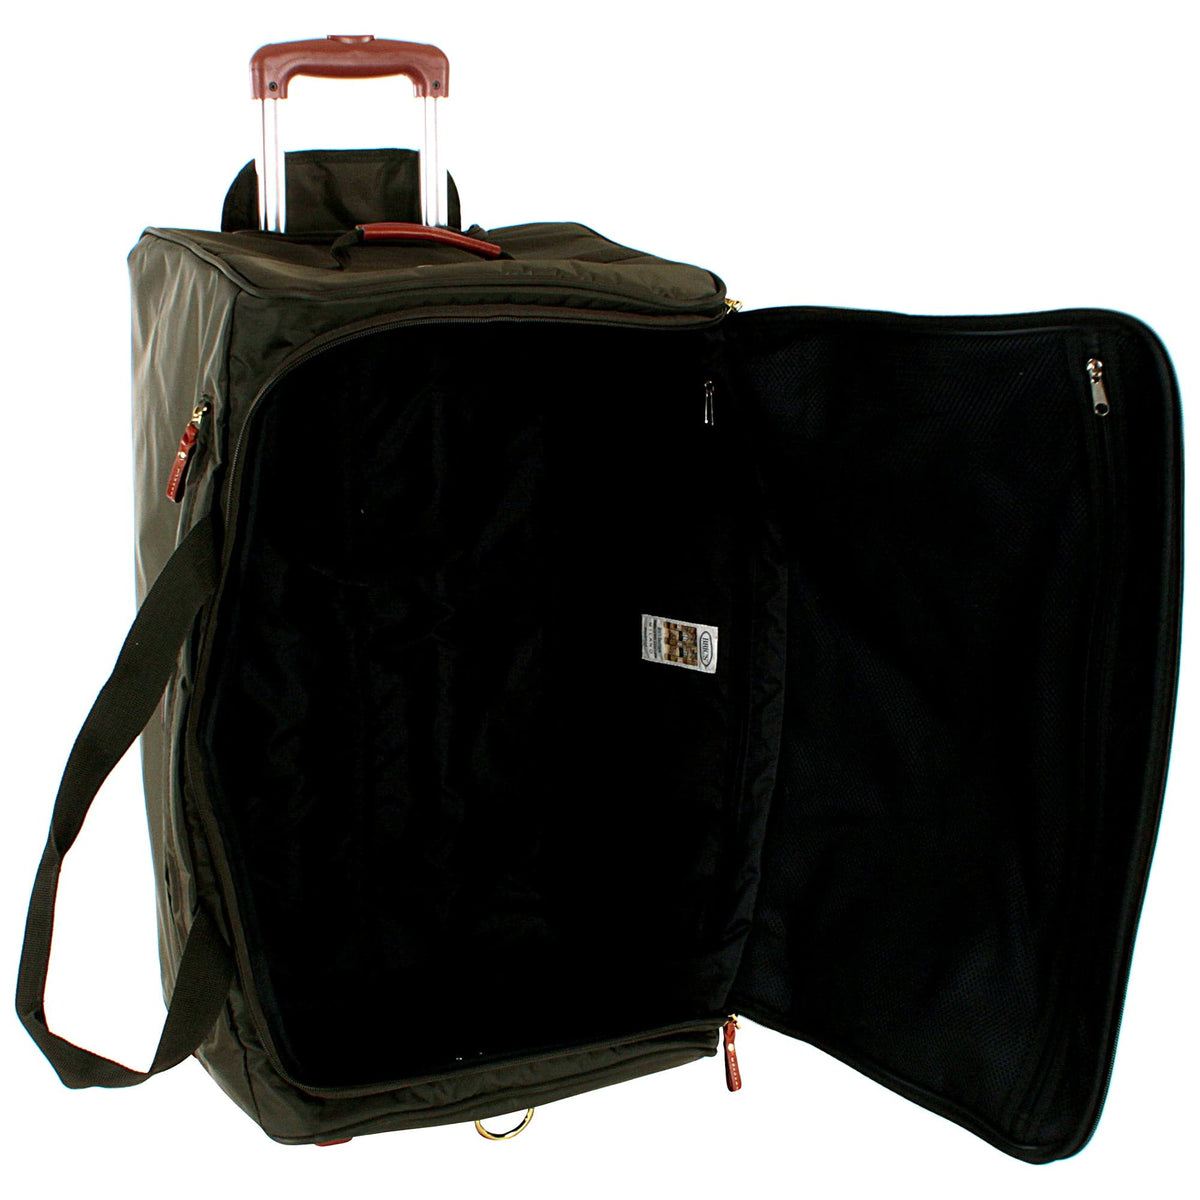 Bric's X-Bag/X Travel 28" Rolling Duffle Bag